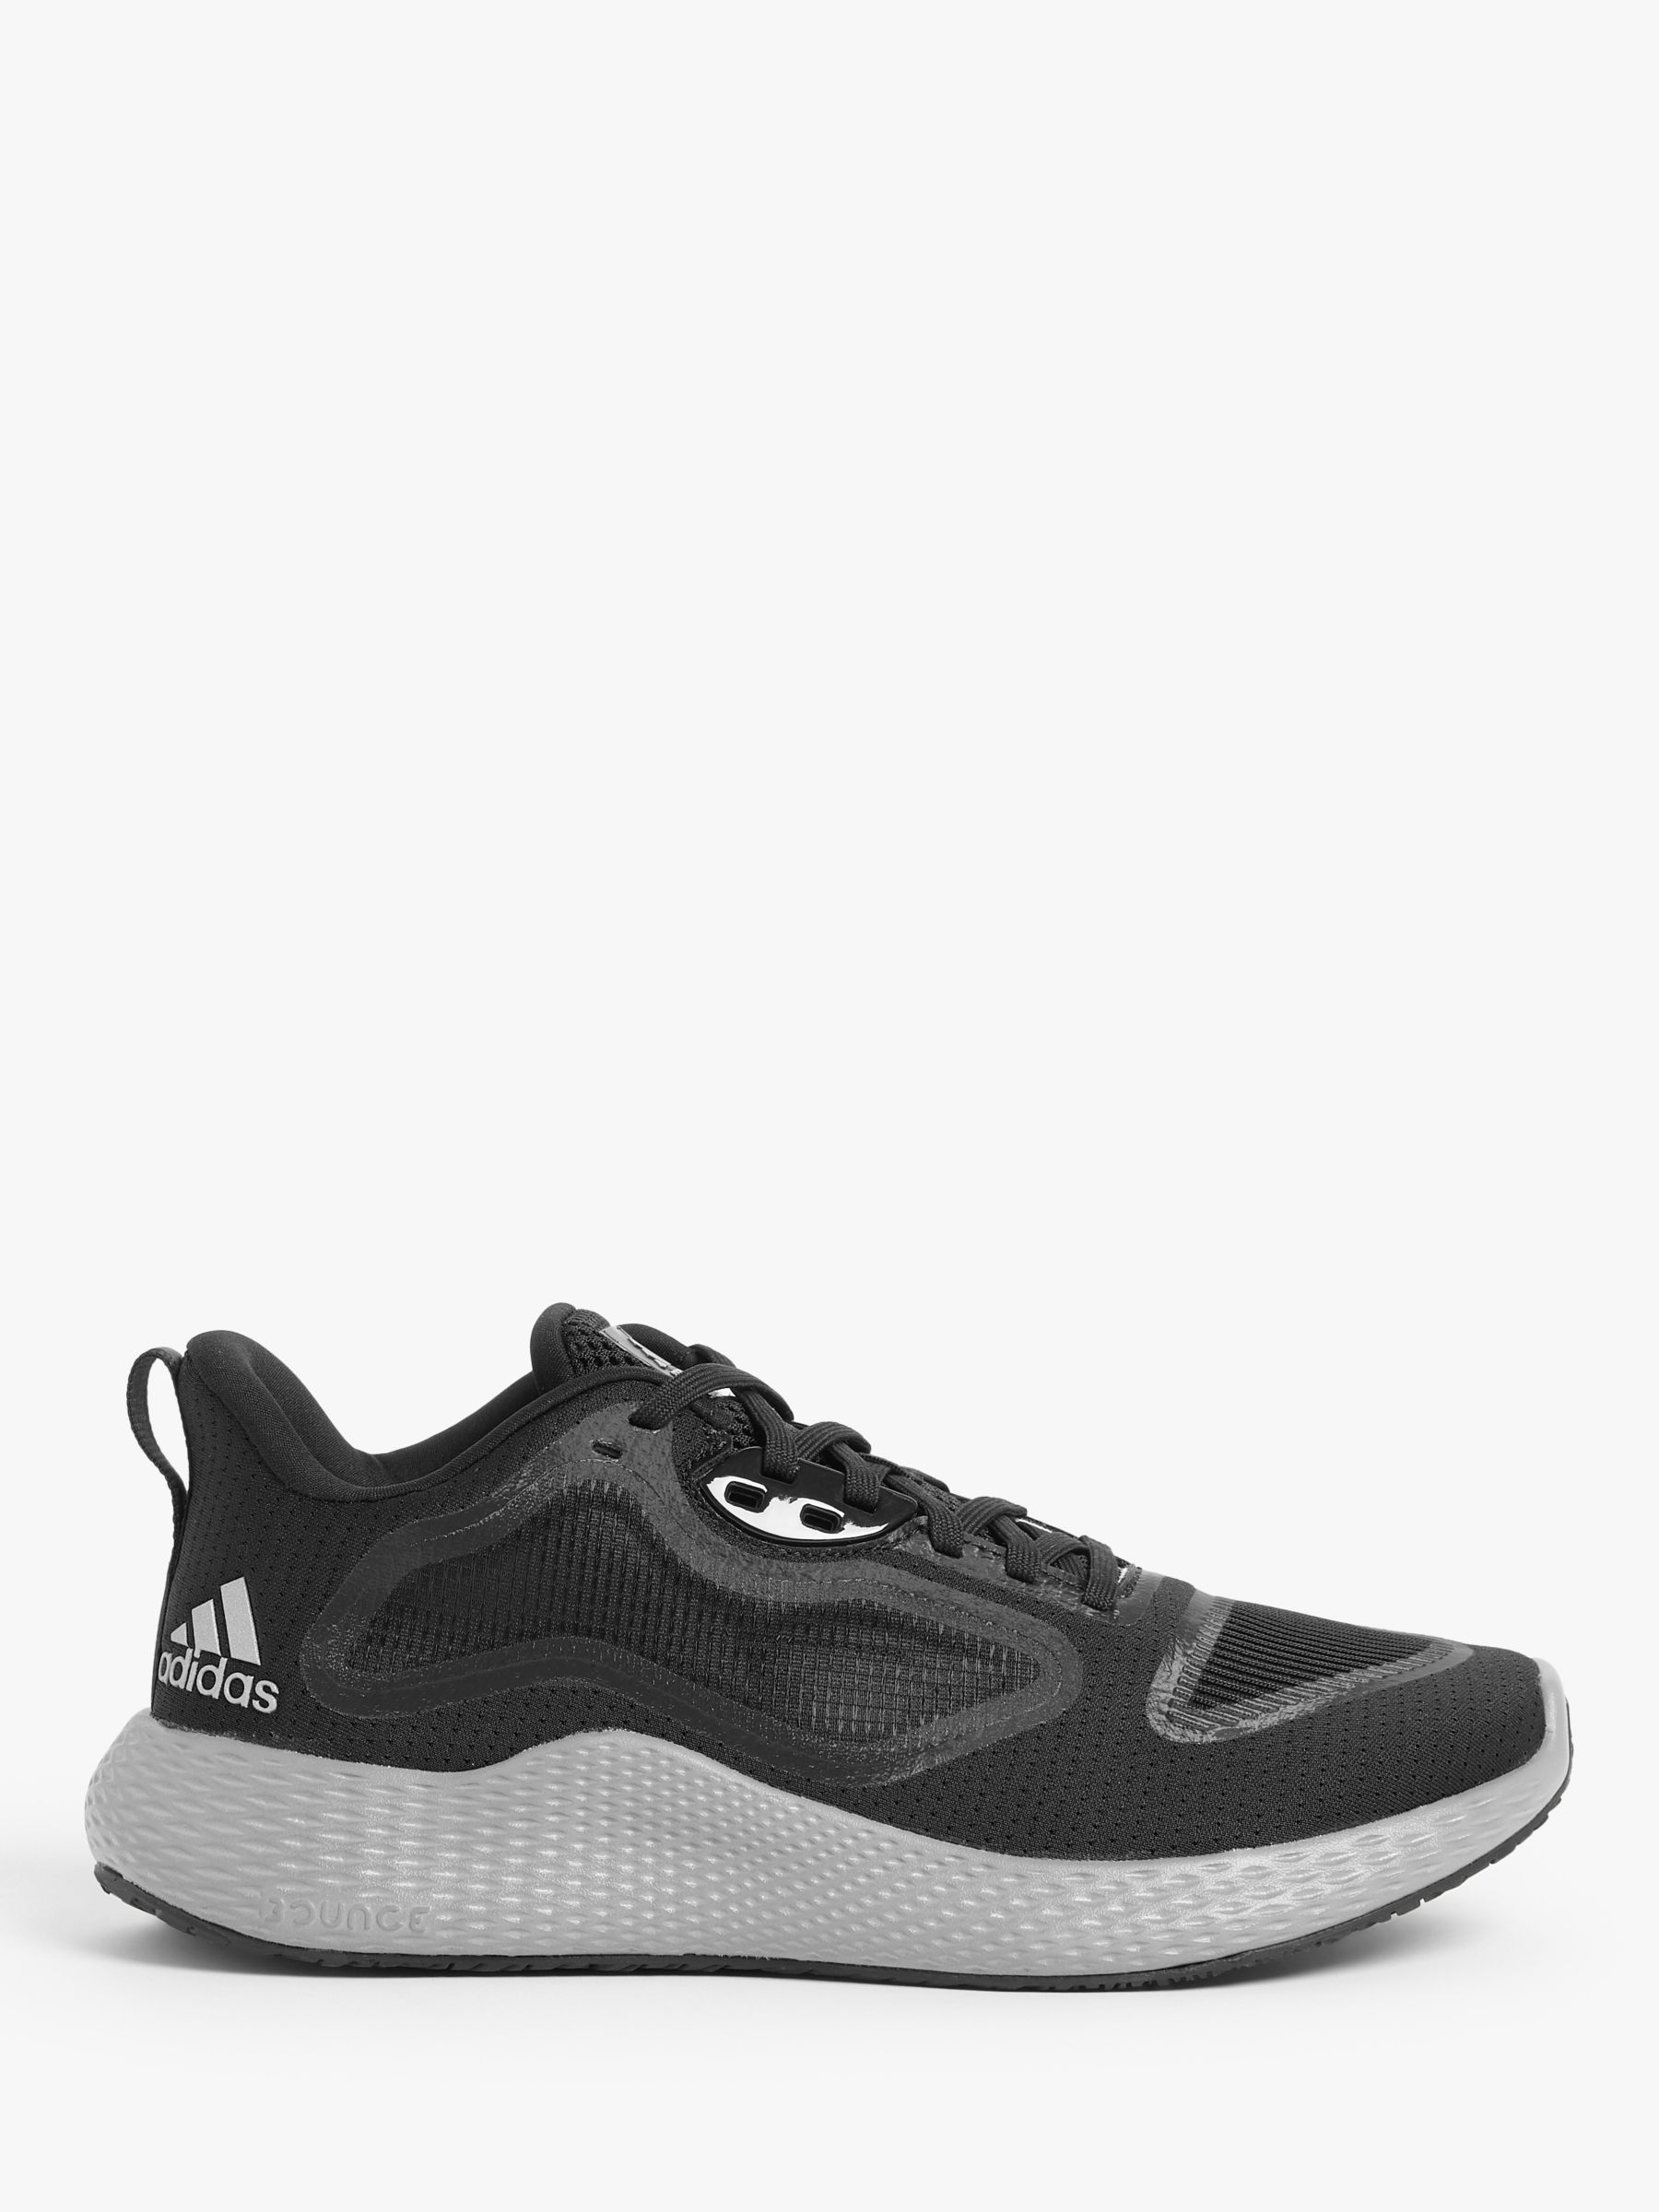 adidas Edge RC Men's Running Shoes 